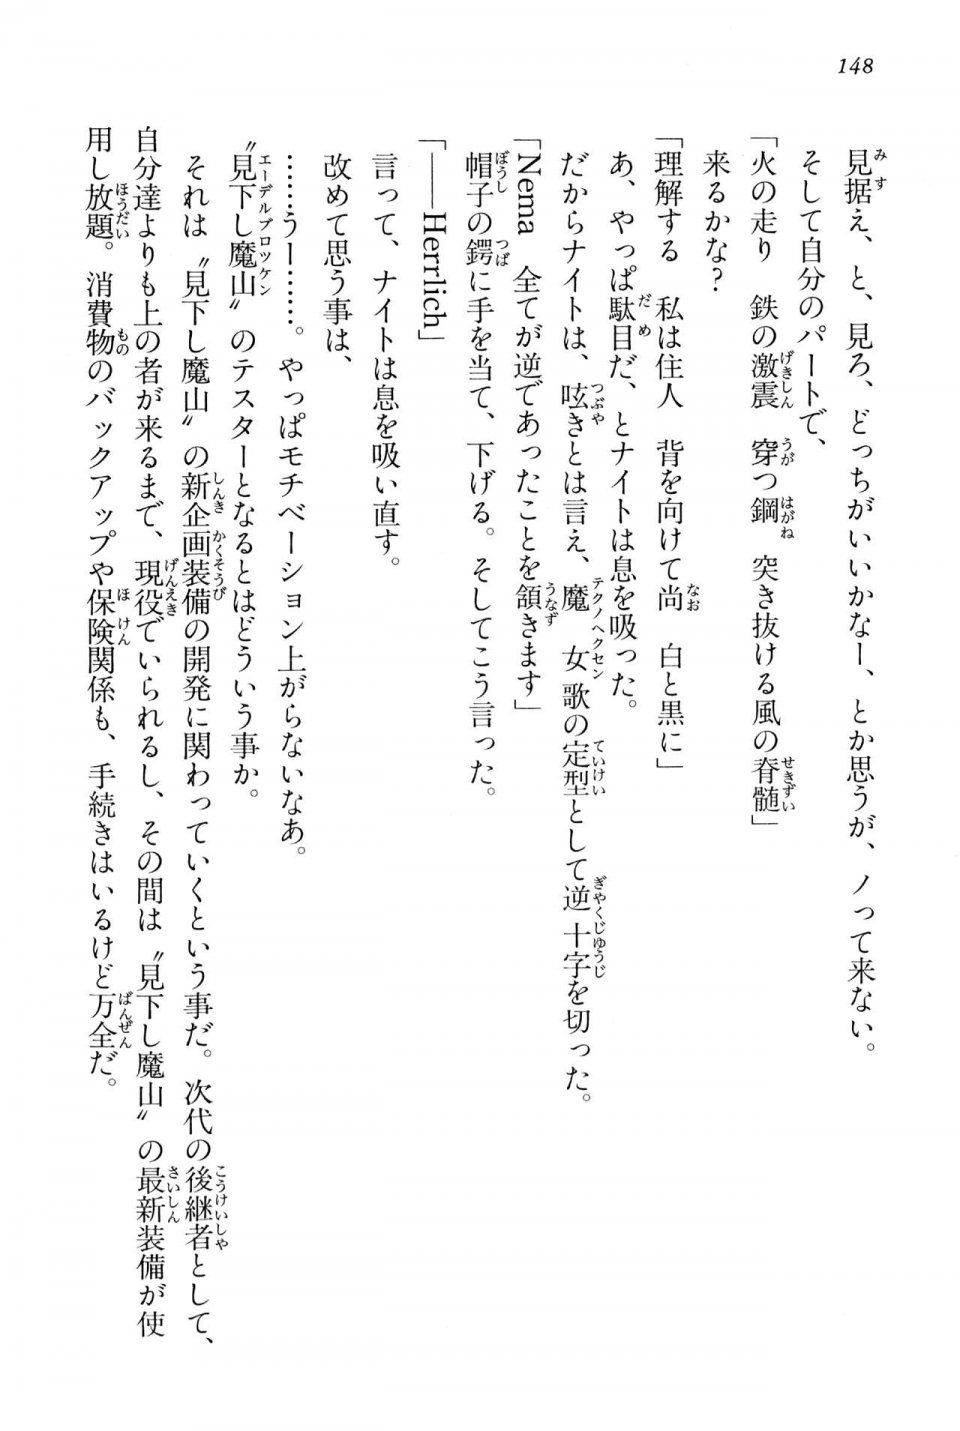 Kyoukai Senjou no Horizon BD Special Mininovel Vol 2(1B) - Photo #152